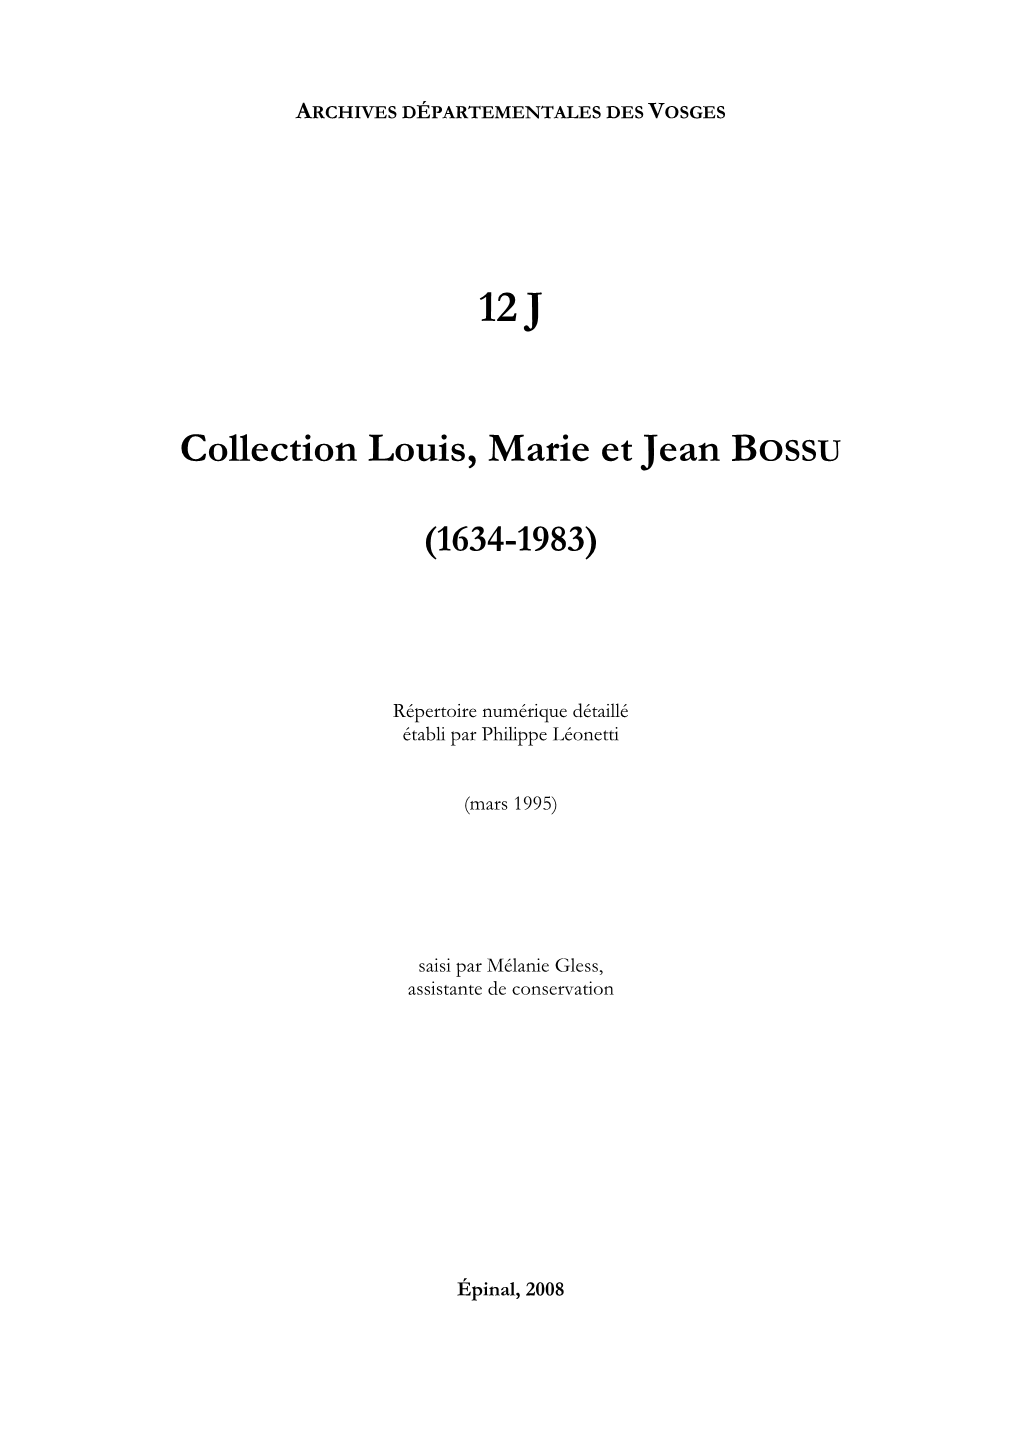 Collection Louis, Marie Et Jean BOSSU